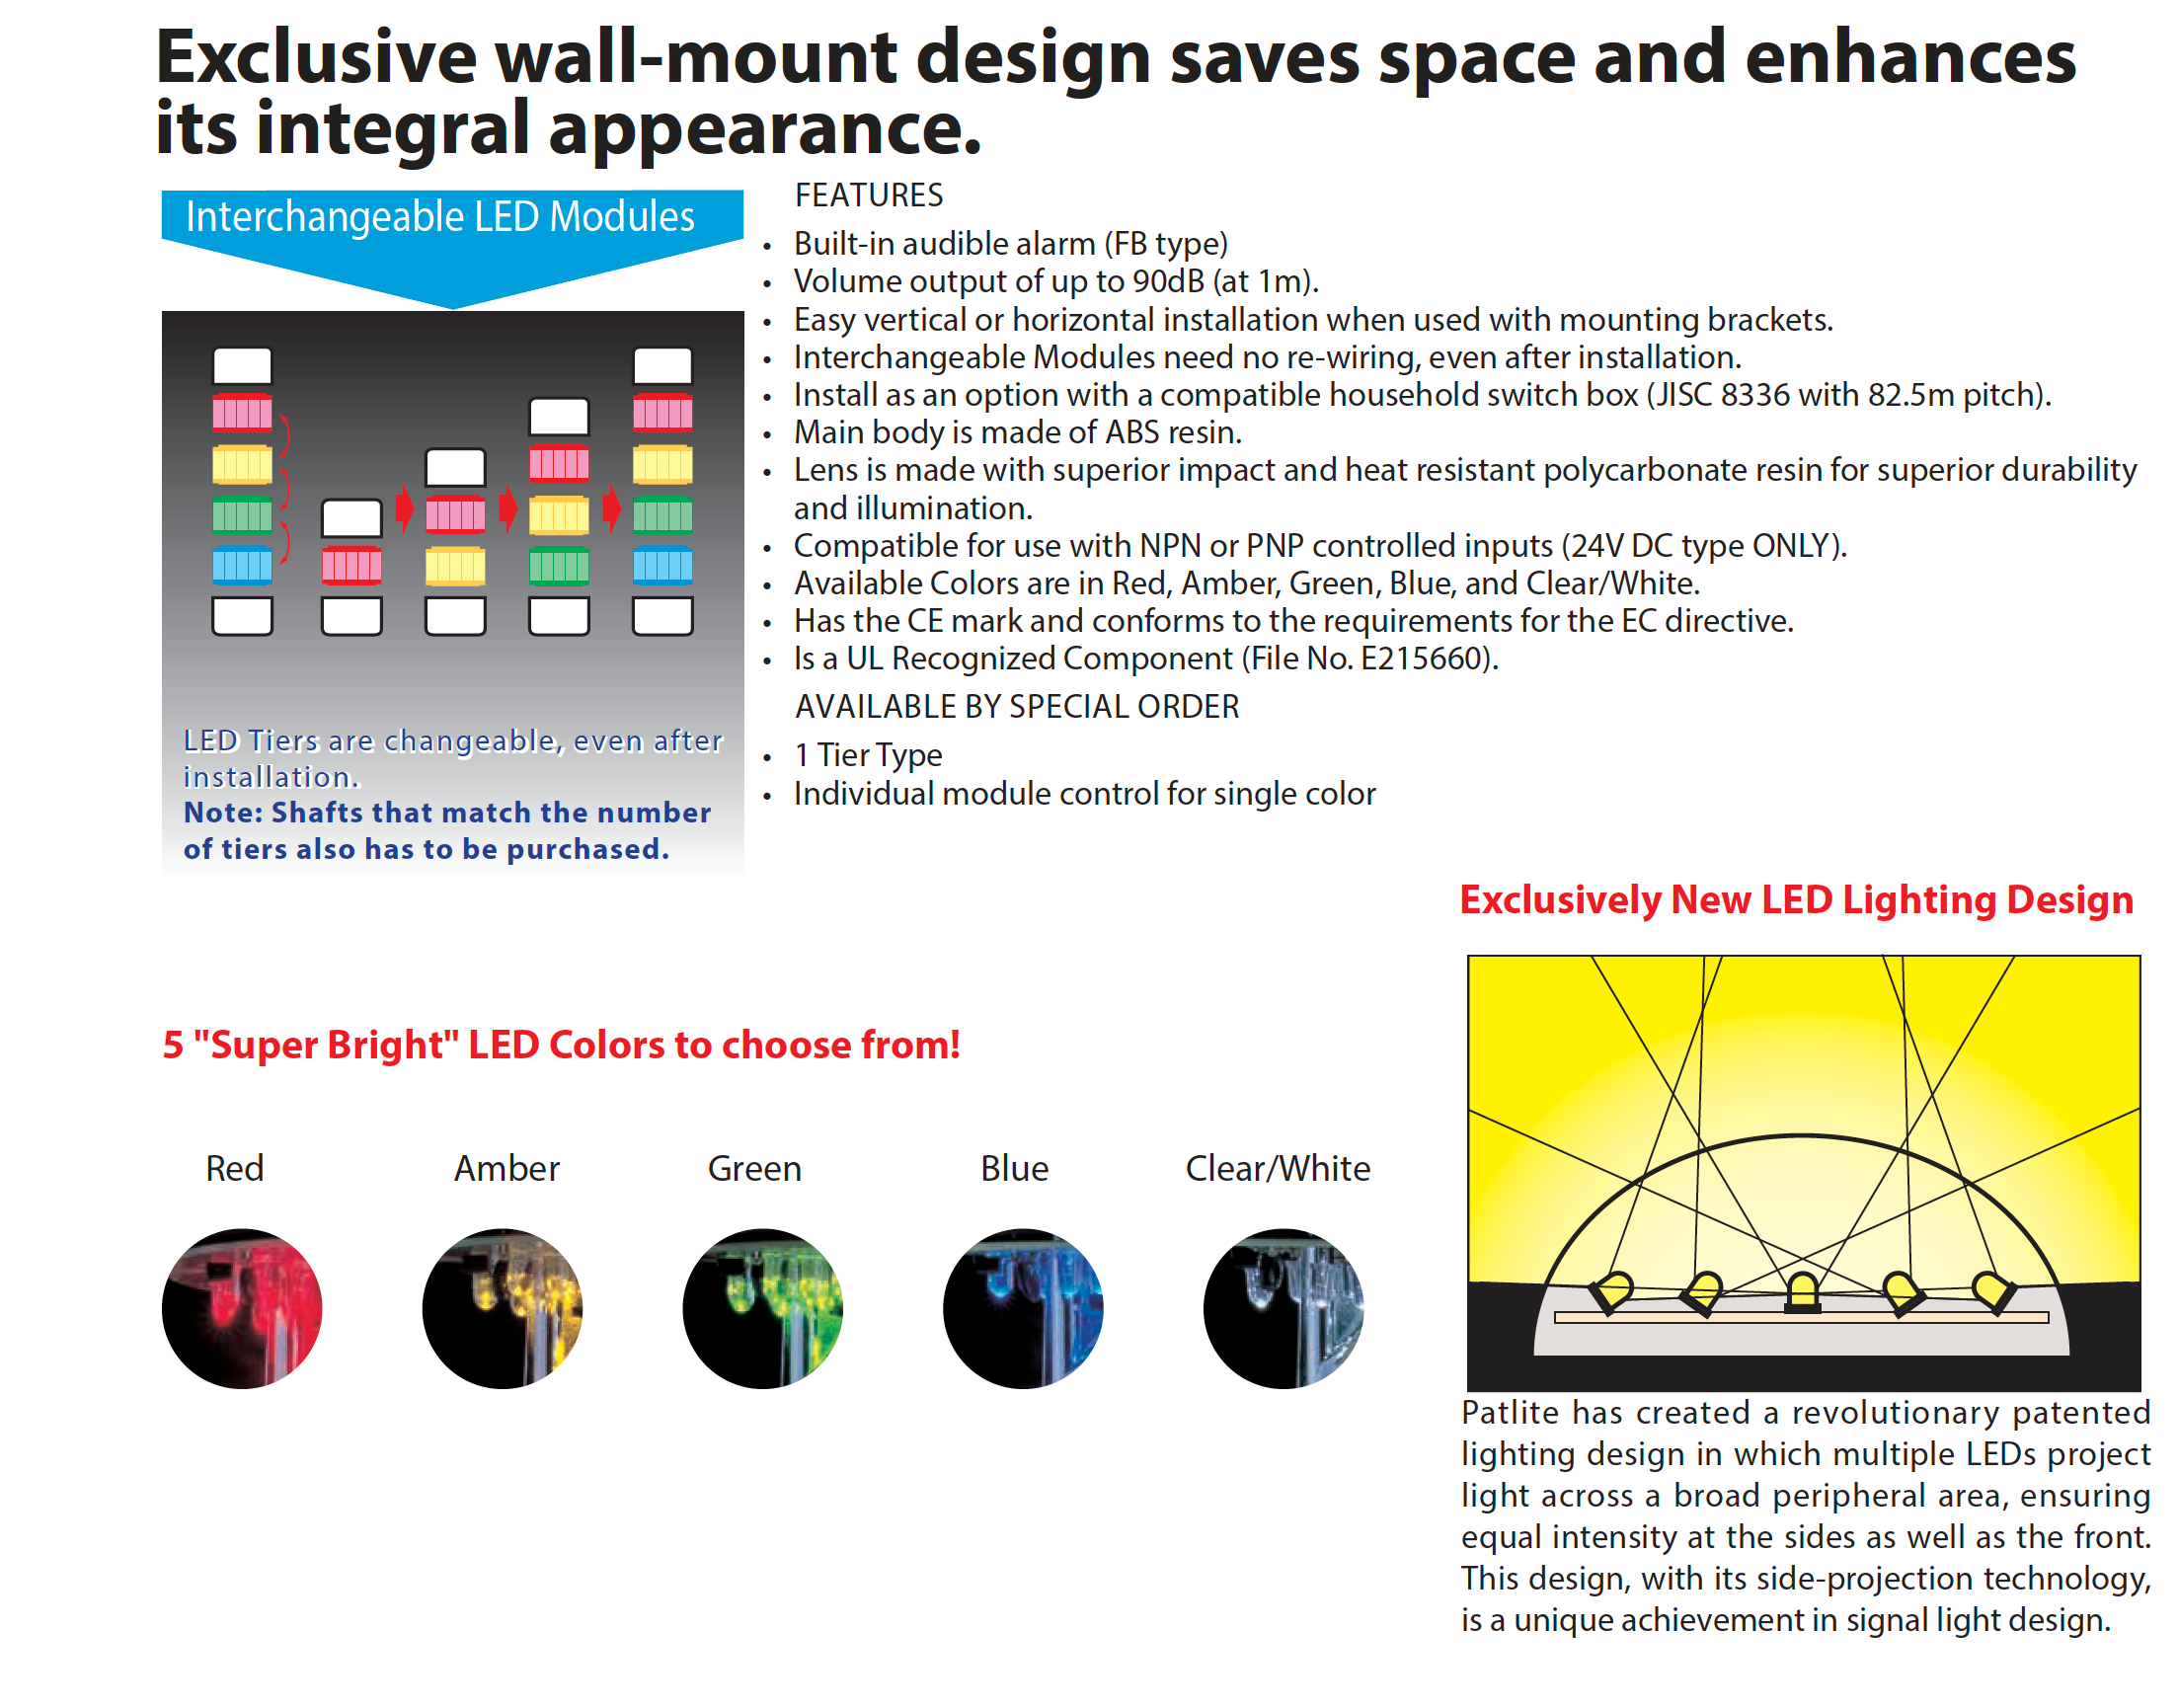 PATLITE SIGNALFX WME-302A-RYG LED Indicating Light Wall Mounting Multi Colour Indicating Light